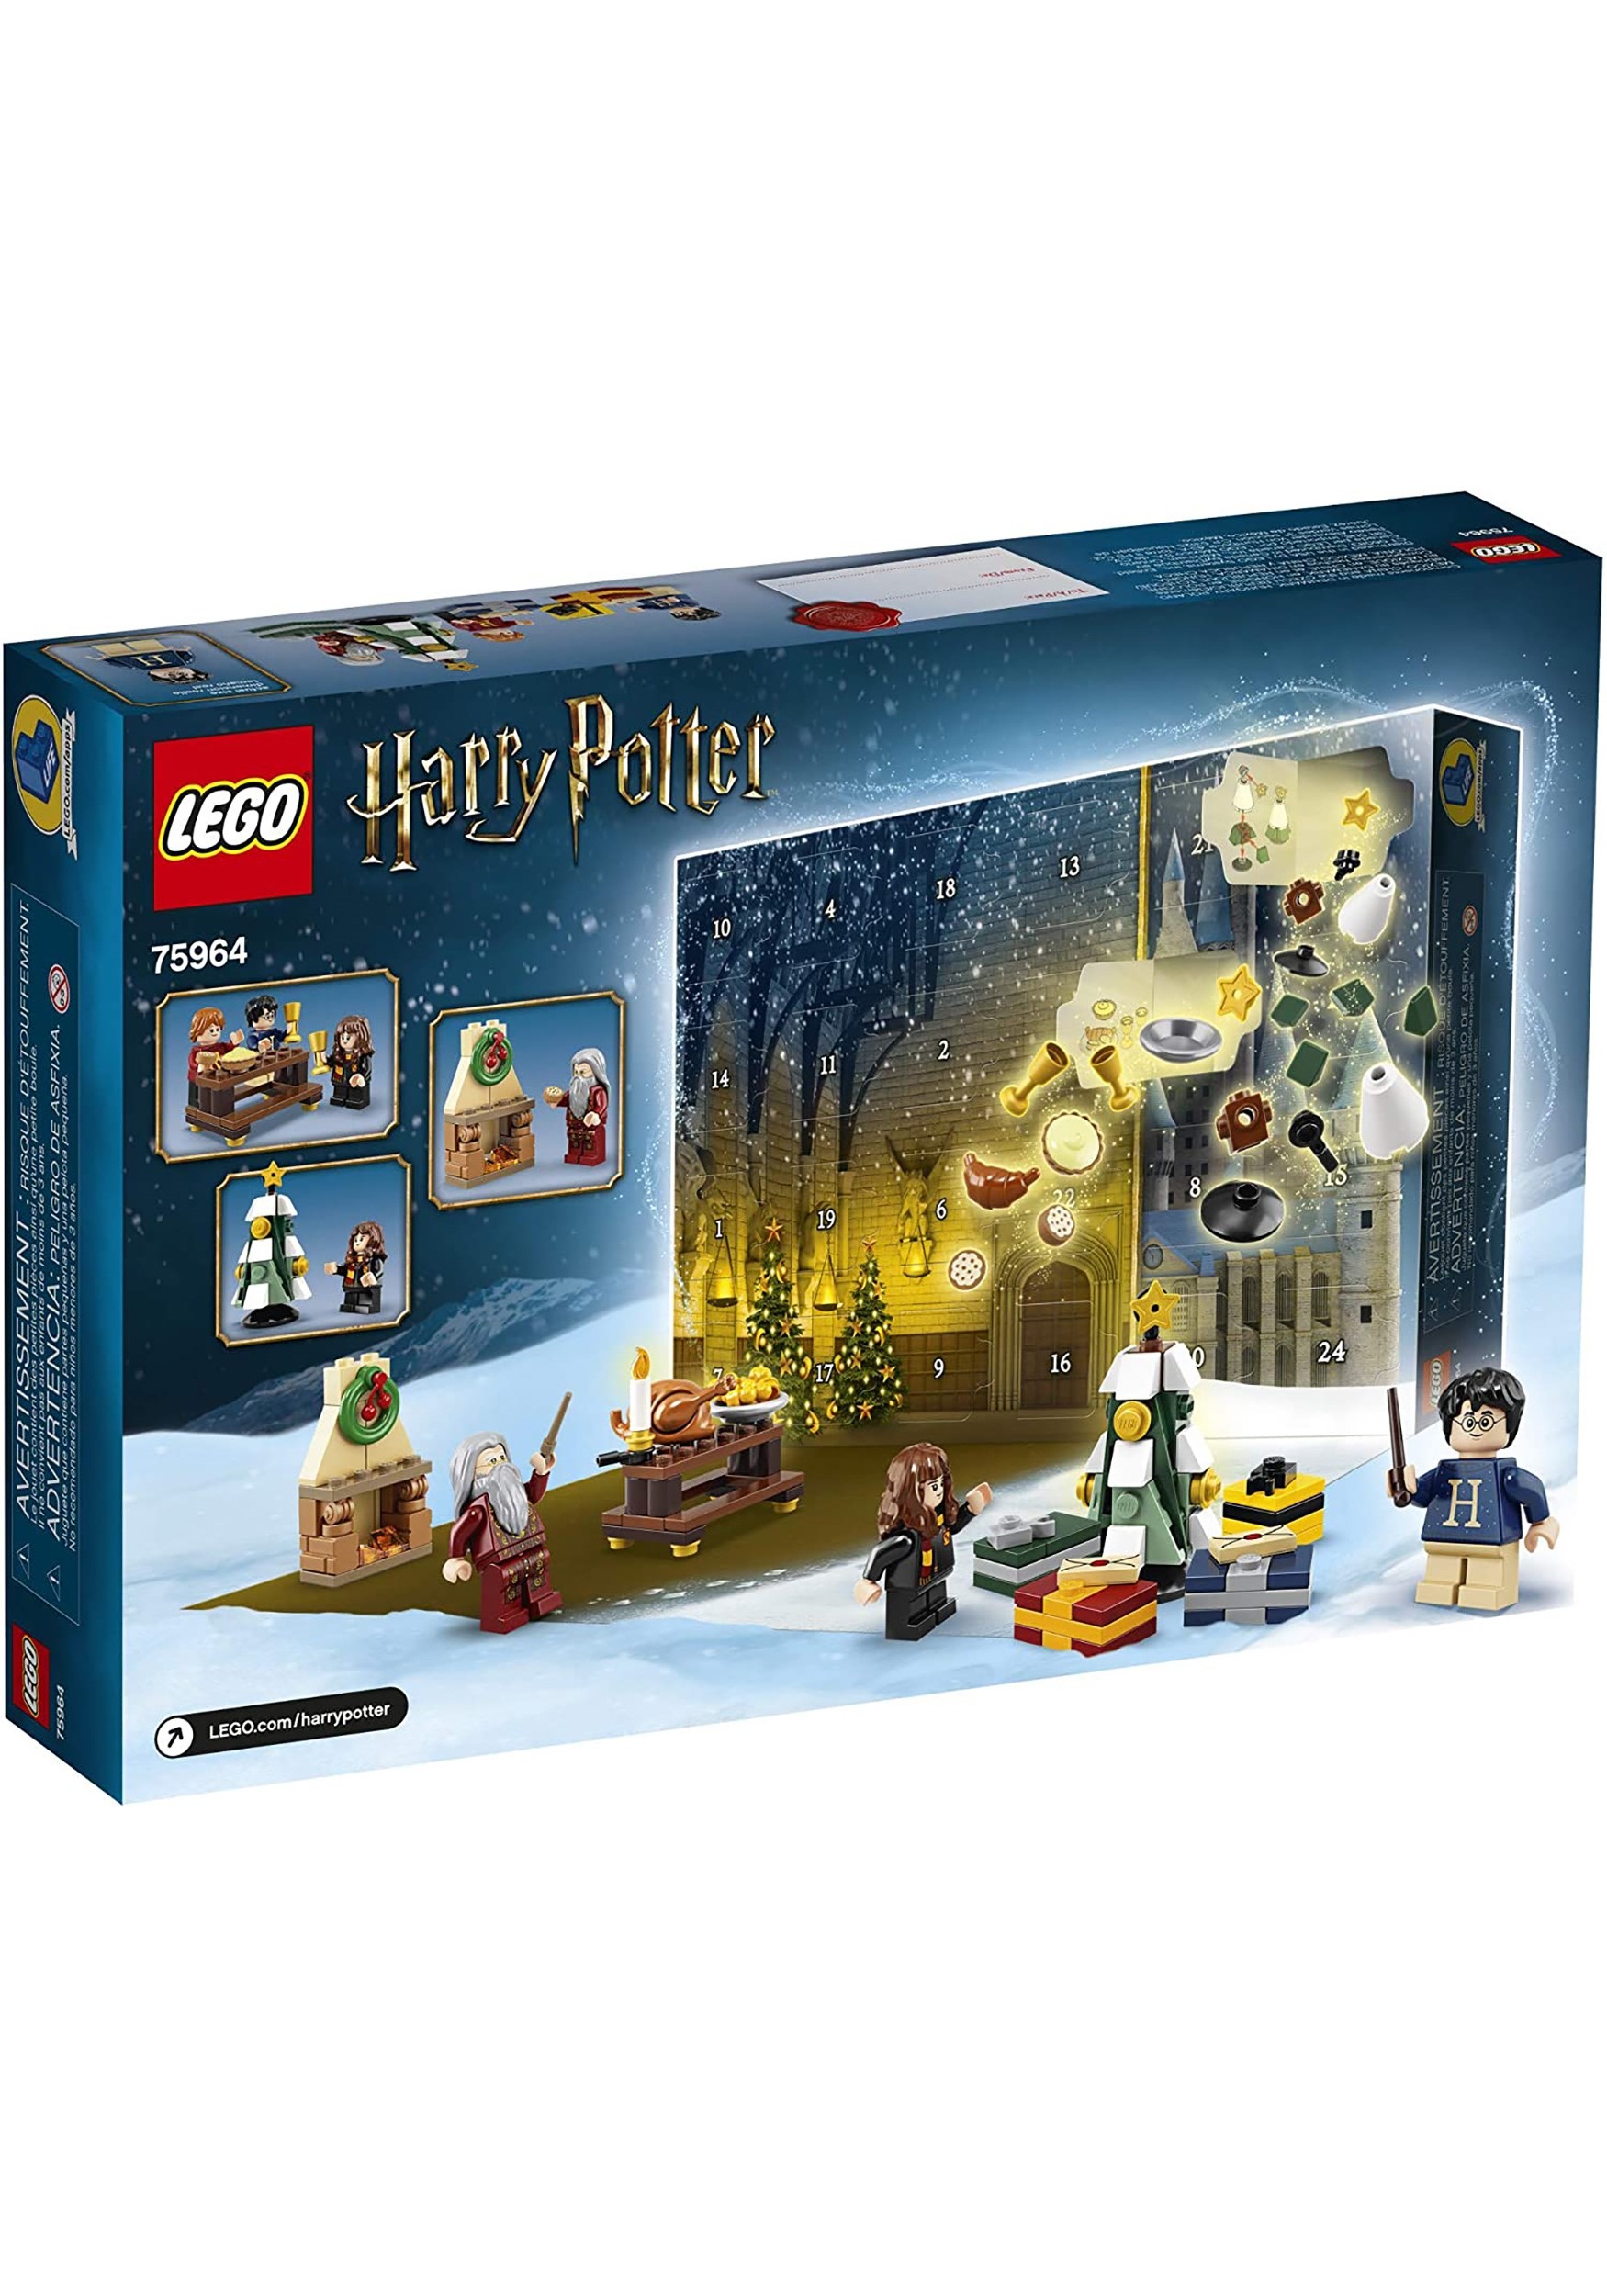 Harry Potter LEGO Christmas Advent Calendar